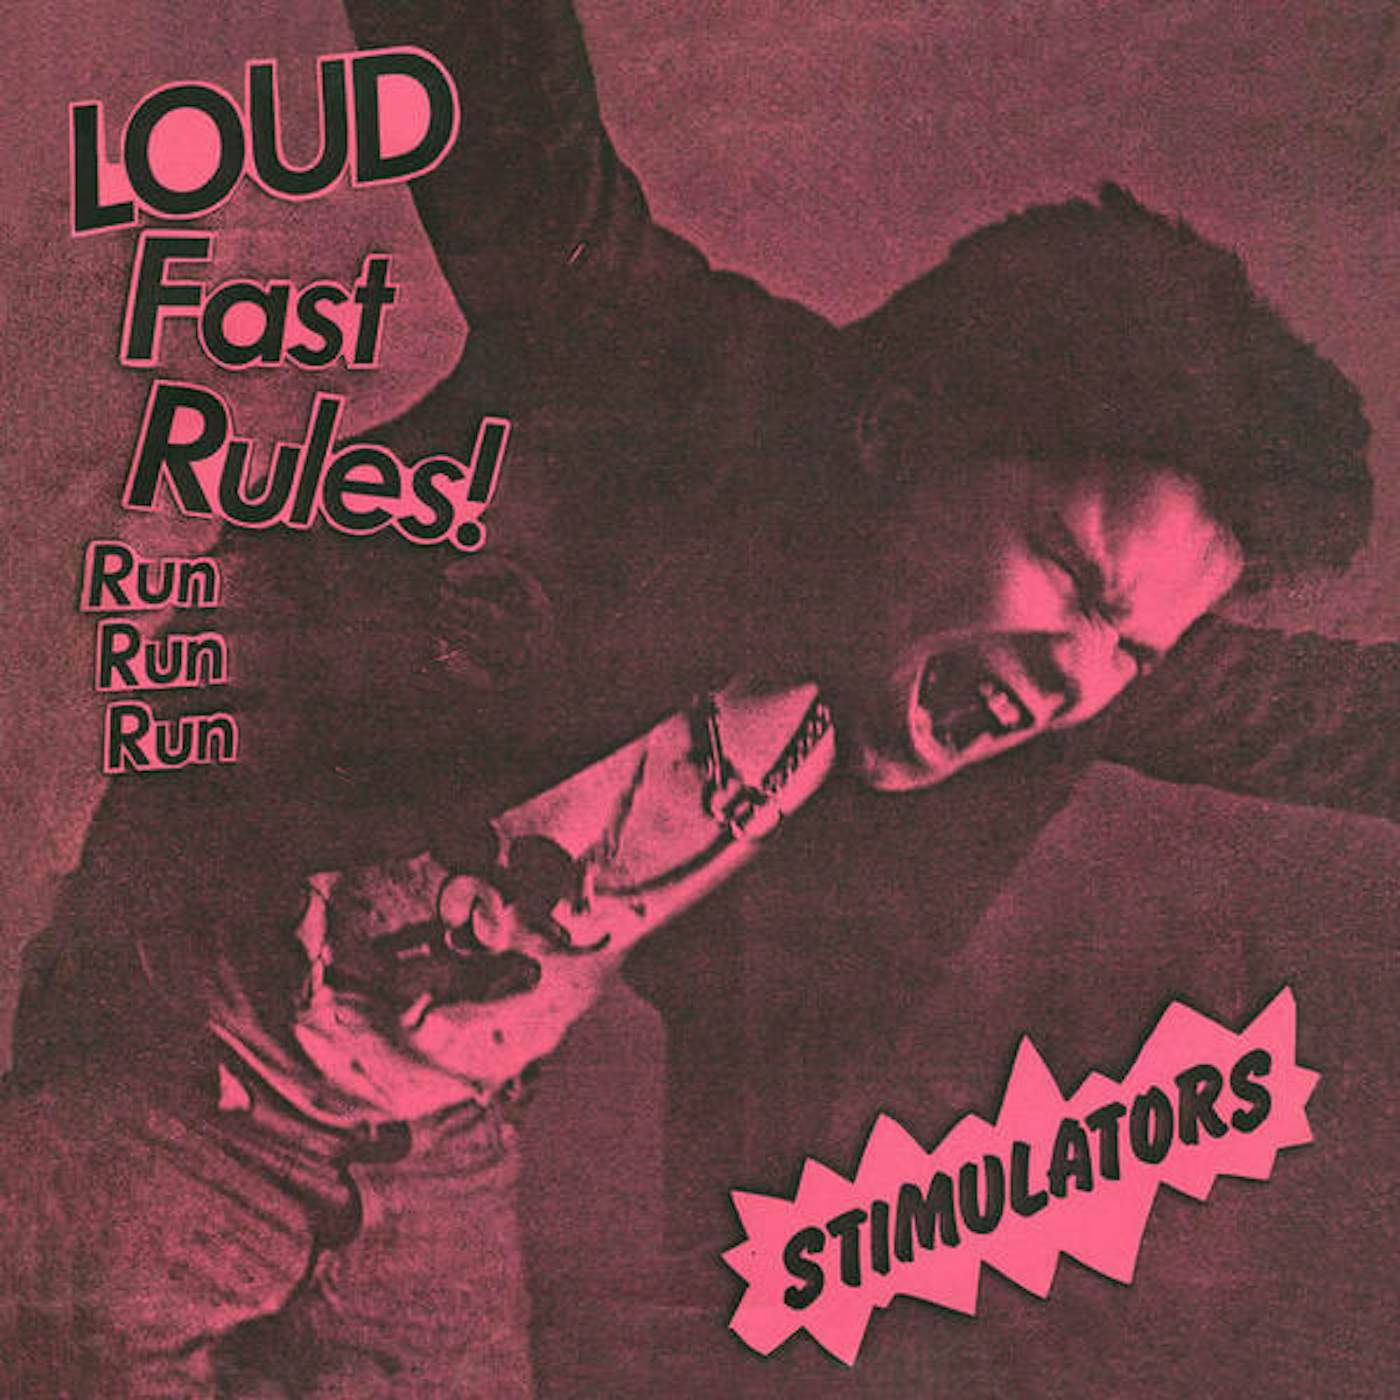 Stimulators Loud Fast Rules Vinyl Record